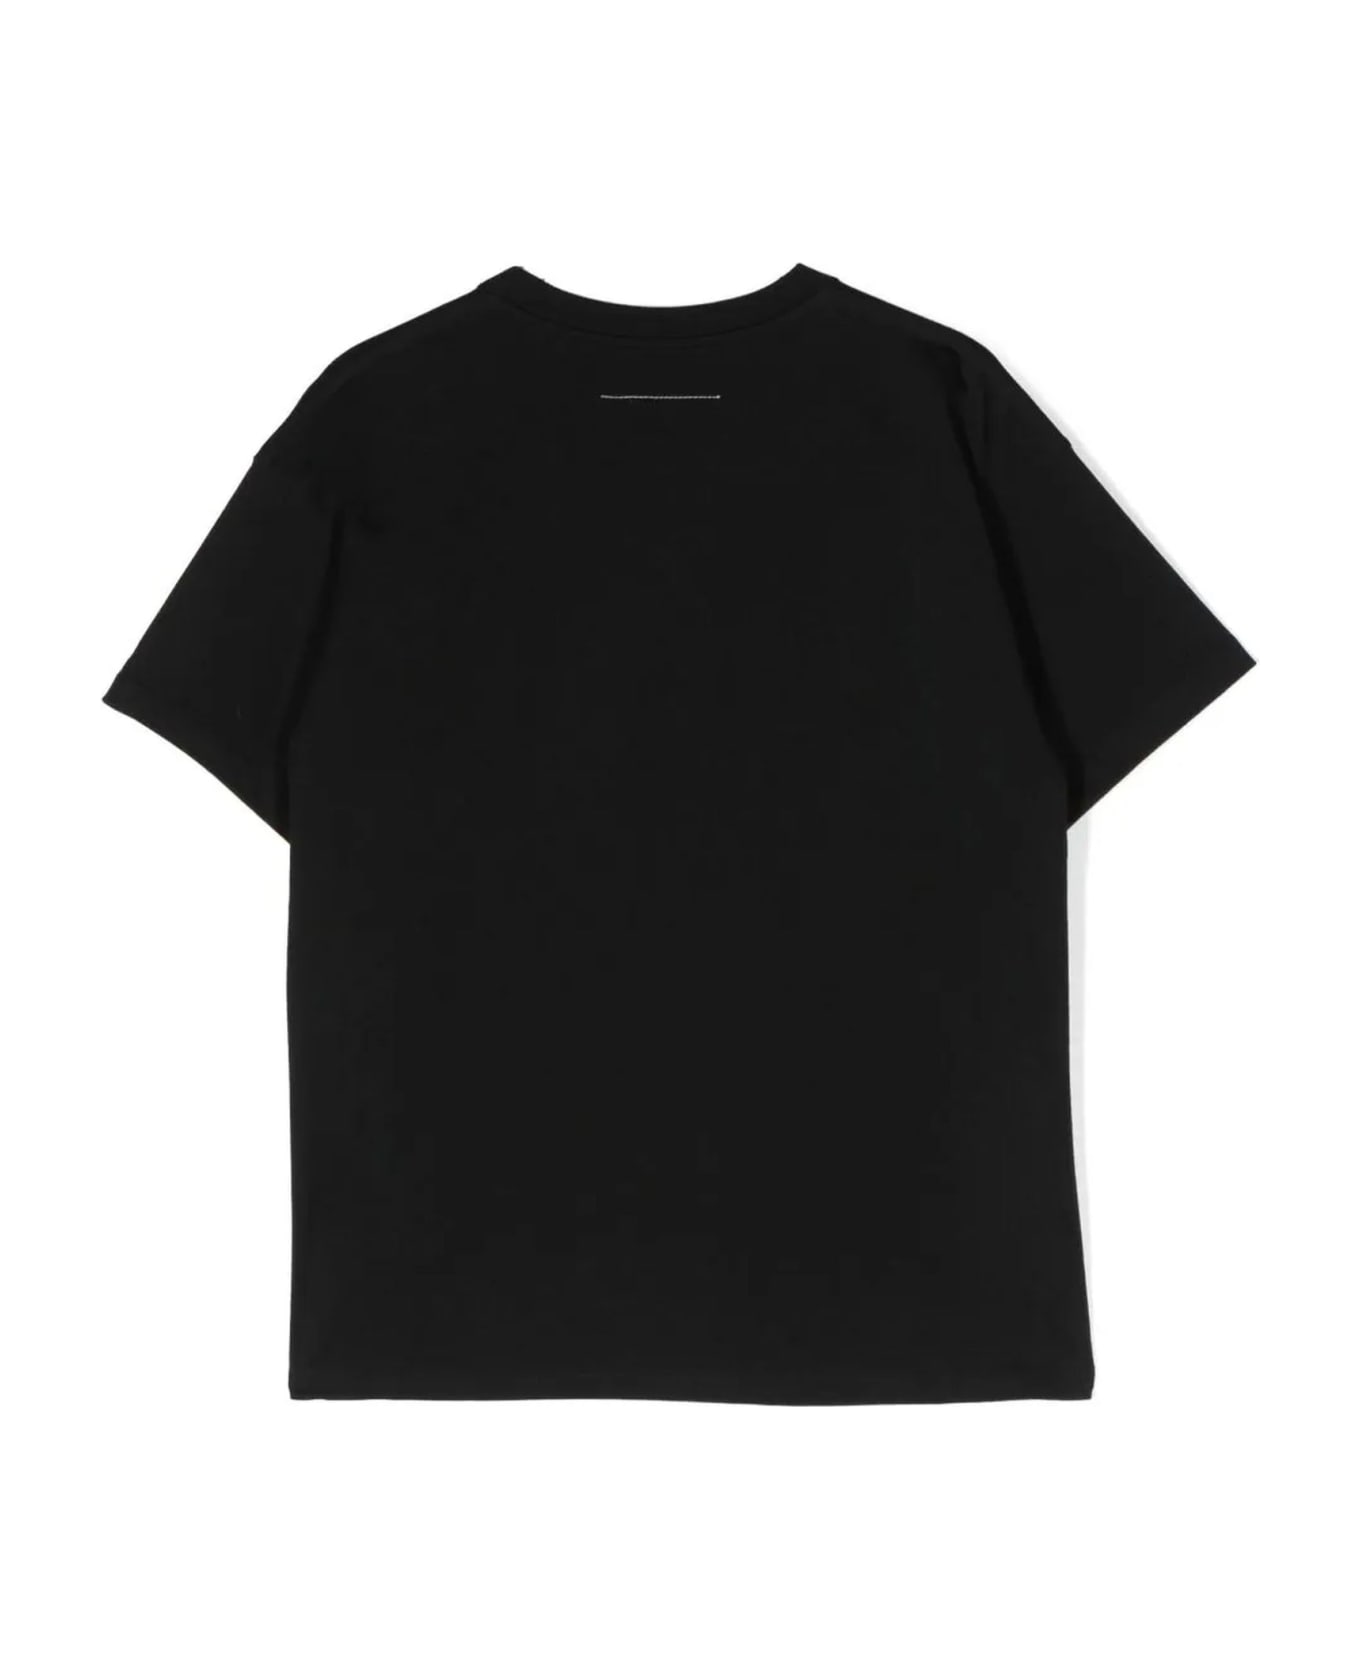 Maison Margiela T-shirts And Polos Black - Black